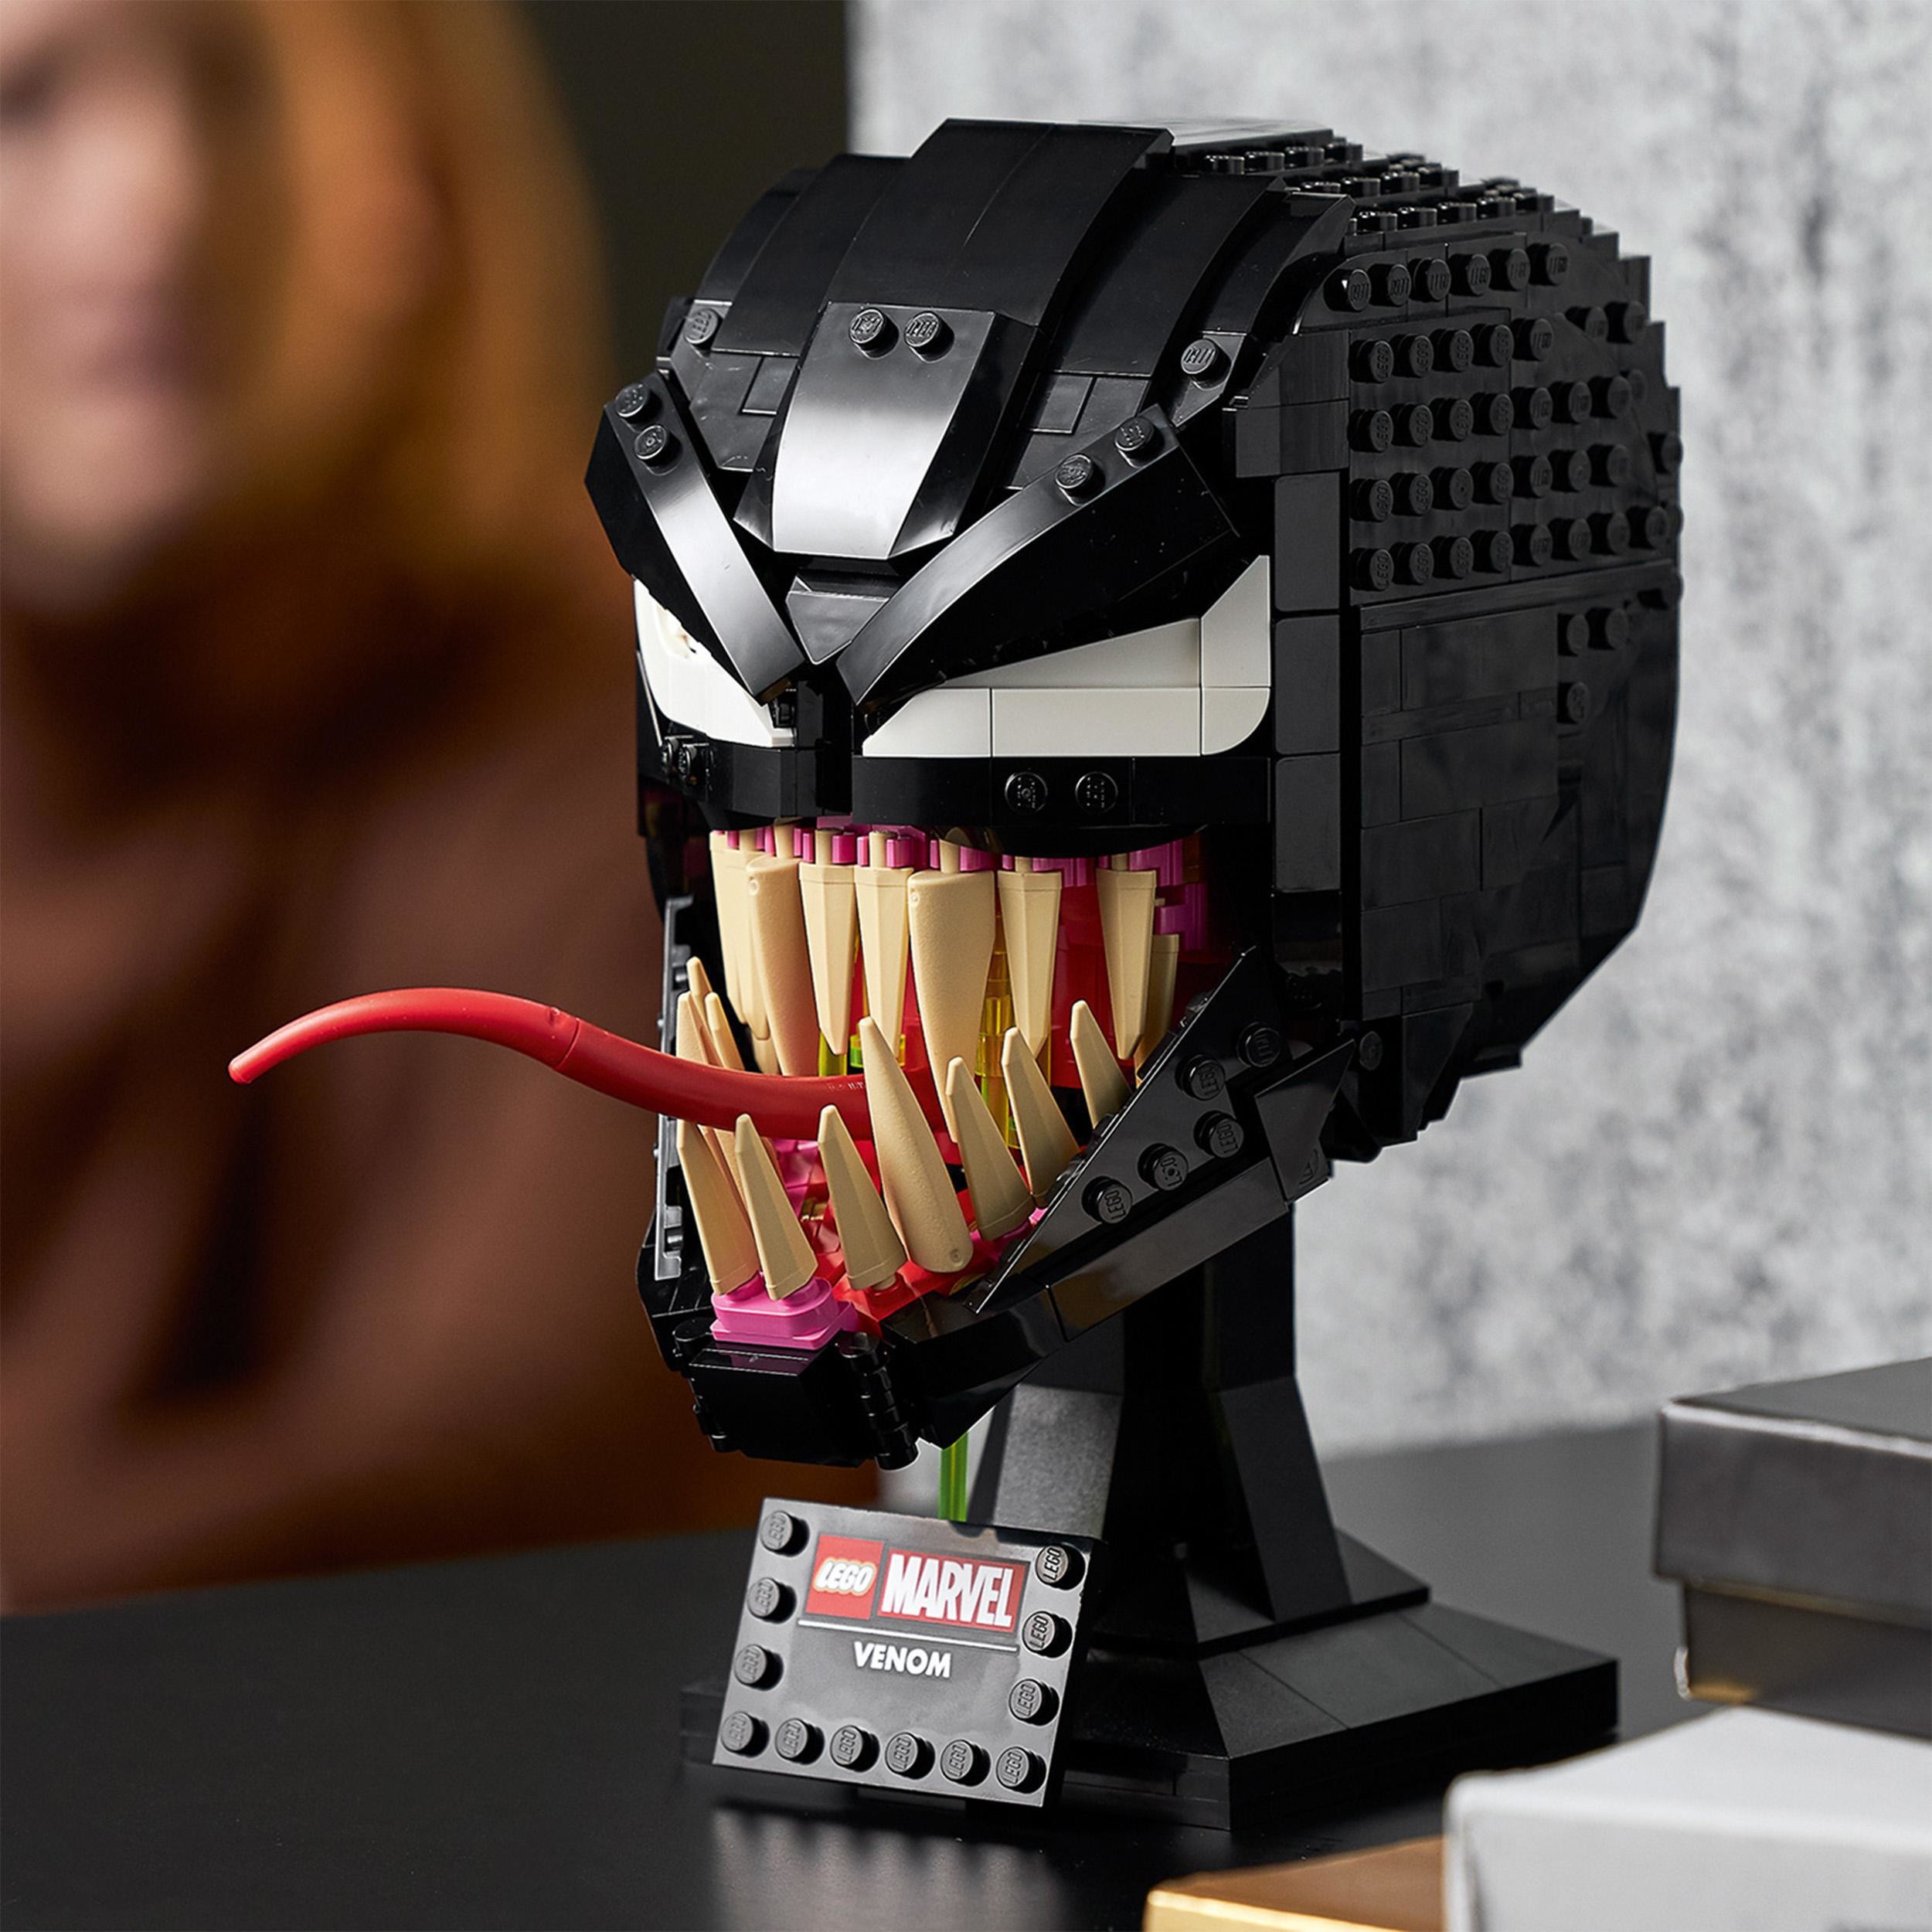 LEGO Marvel Super Heroes Marvel Spider-Man – Venom